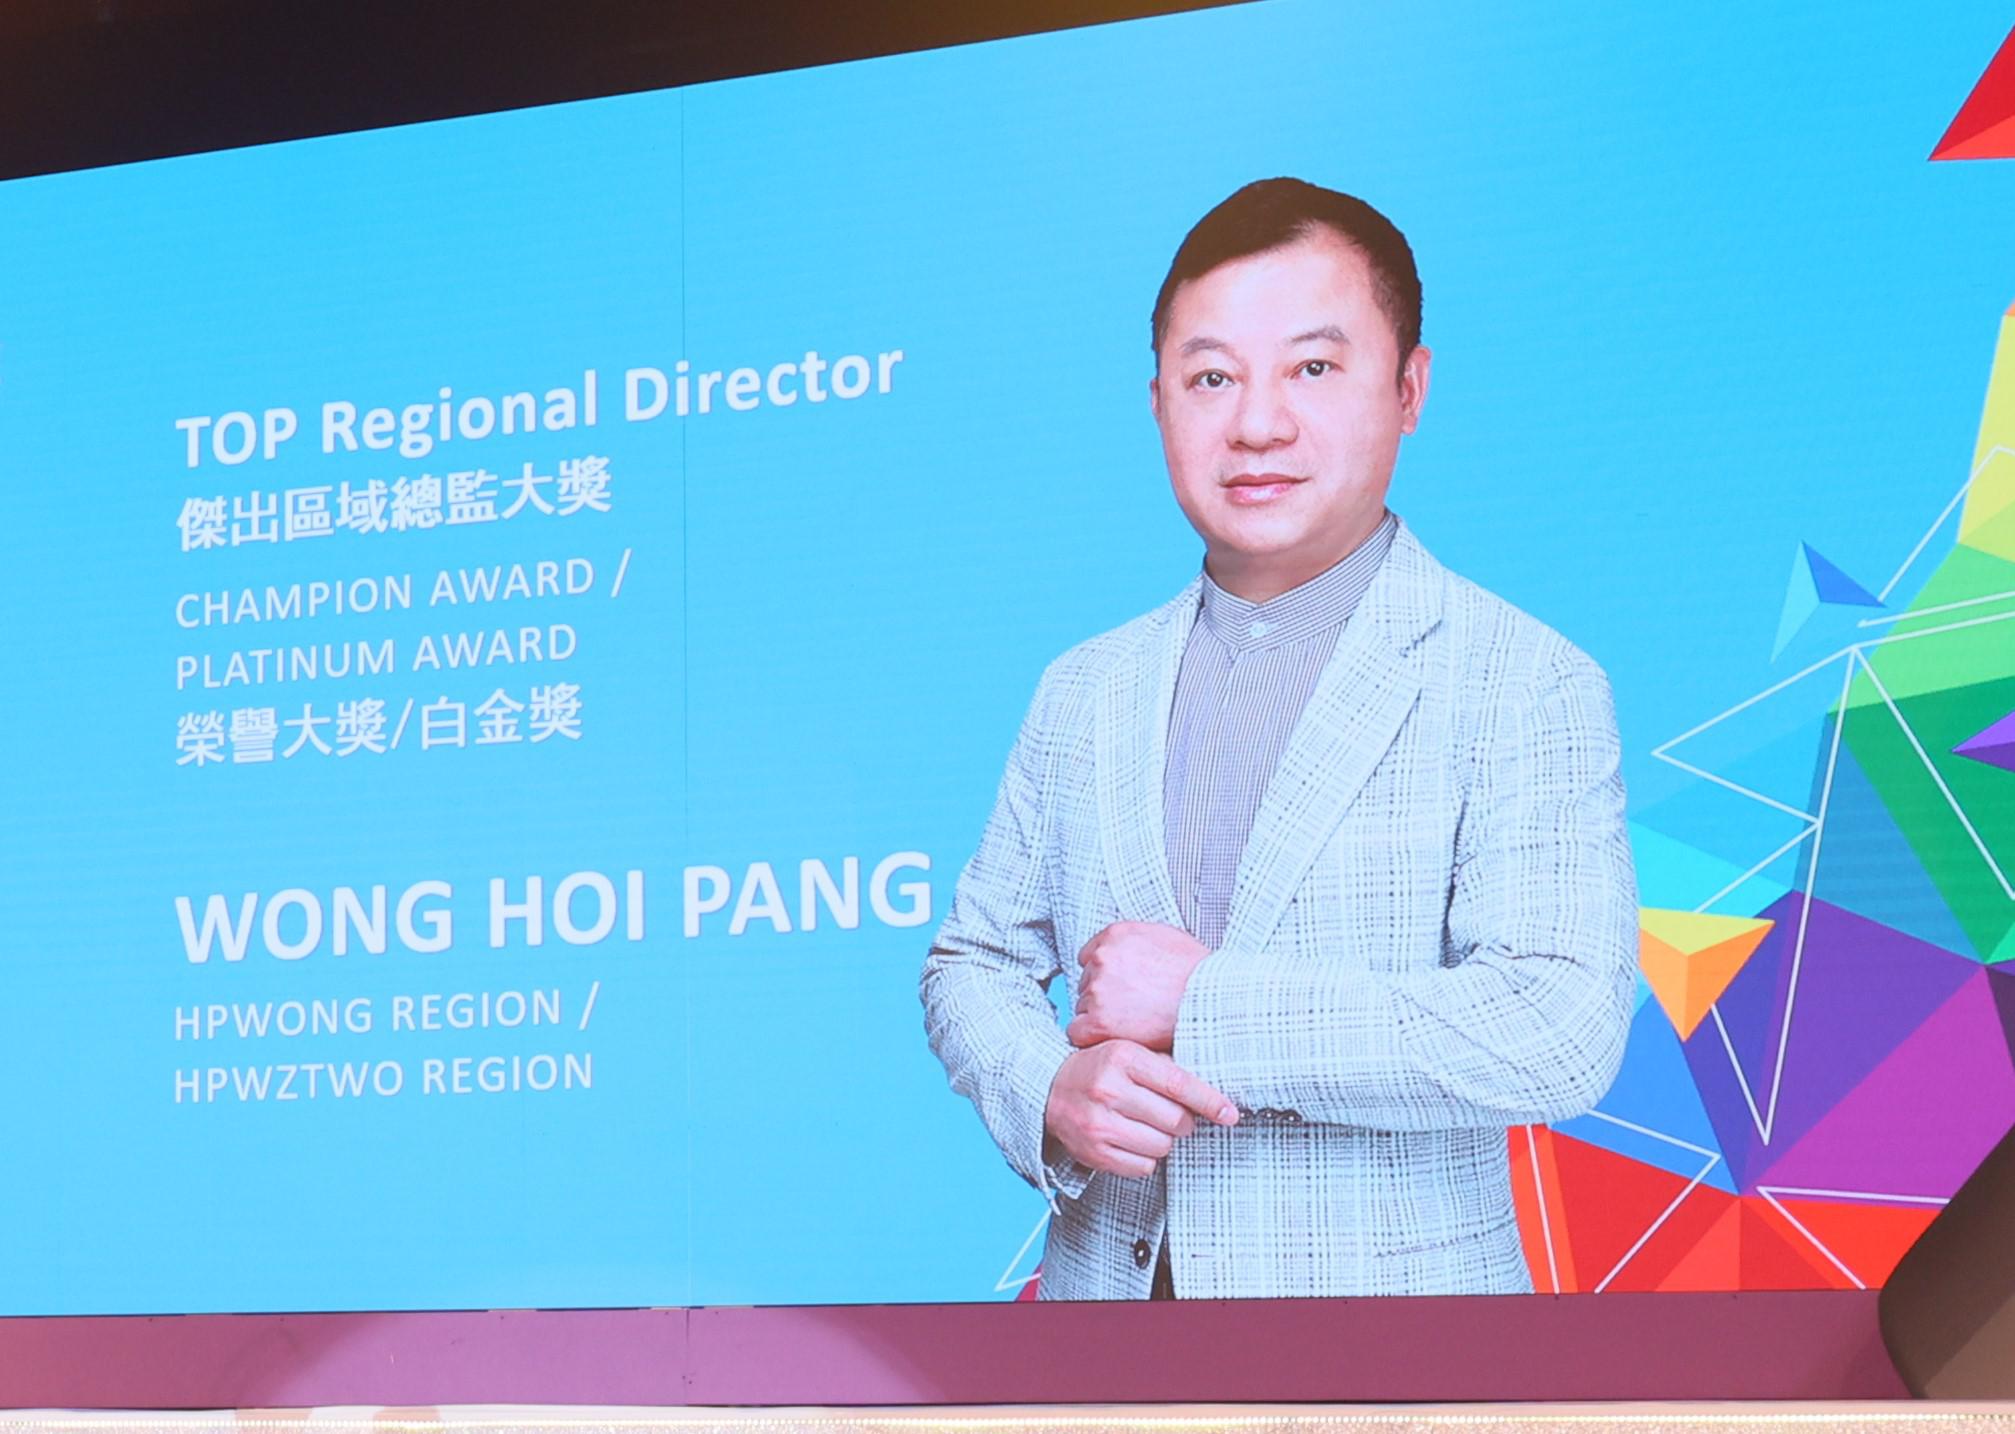 Mr. Wong Hoi Pang, Champion Award and Platinum Award winner of Top Regional Director. 